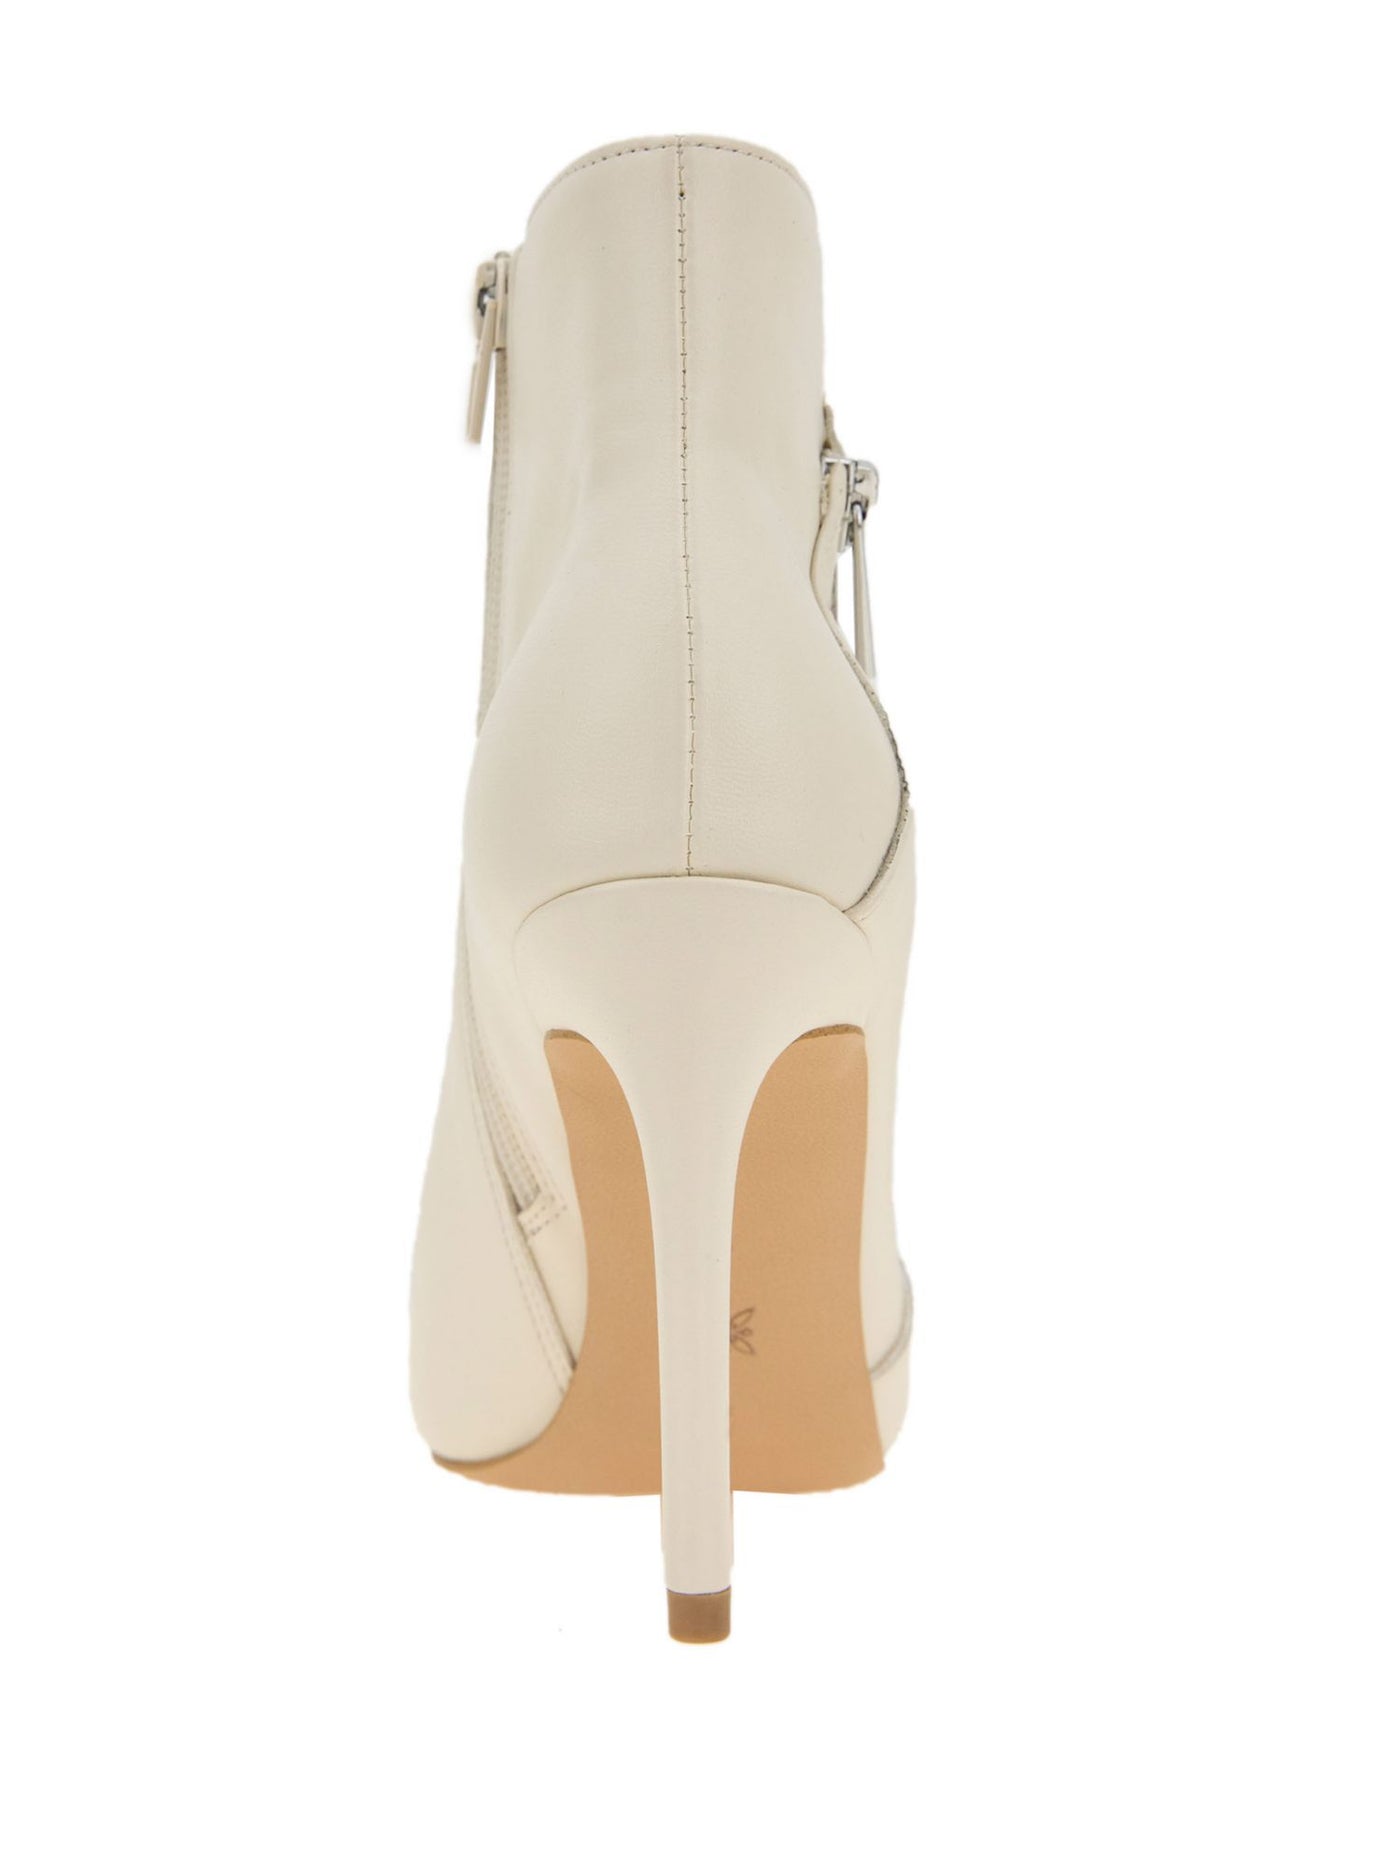 BCBGENERATION Womens Ivory Comfort Houston Pointy Toe Stiletto Zip-Up Dress Booties 6.5 M